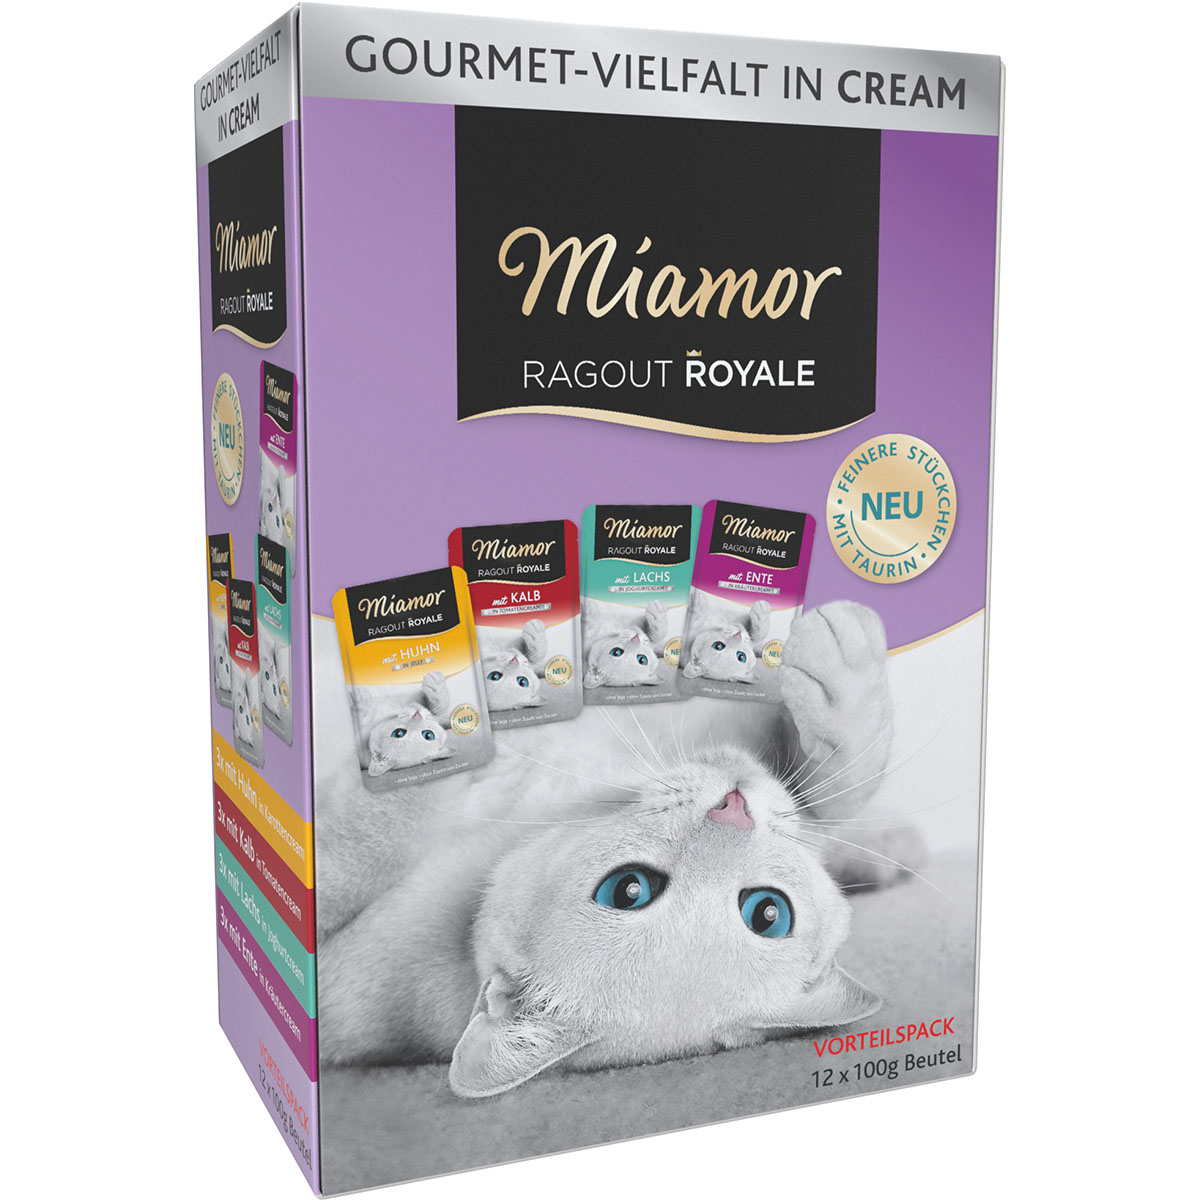 miamor ragout royale cream vielfalt multibox